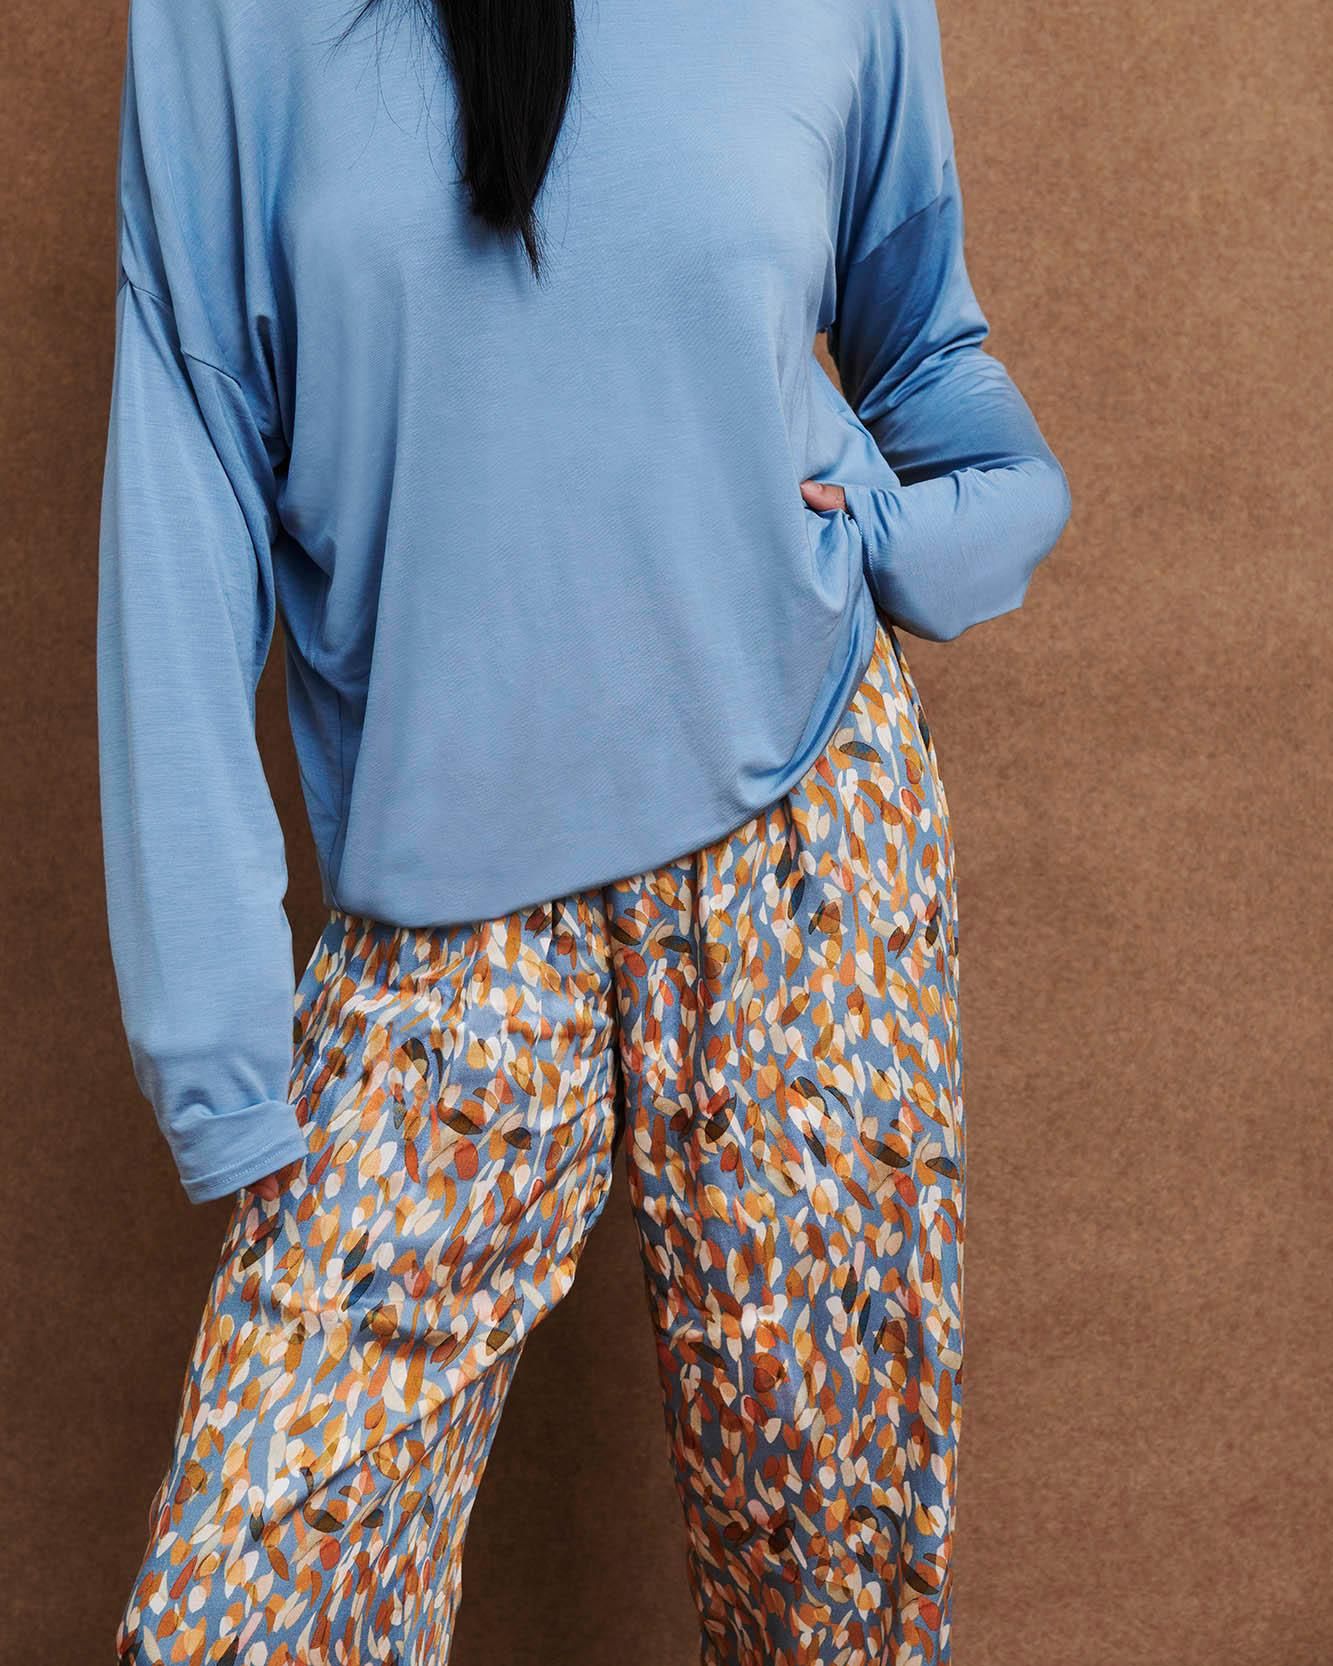 Pyjamas with Printed Pants